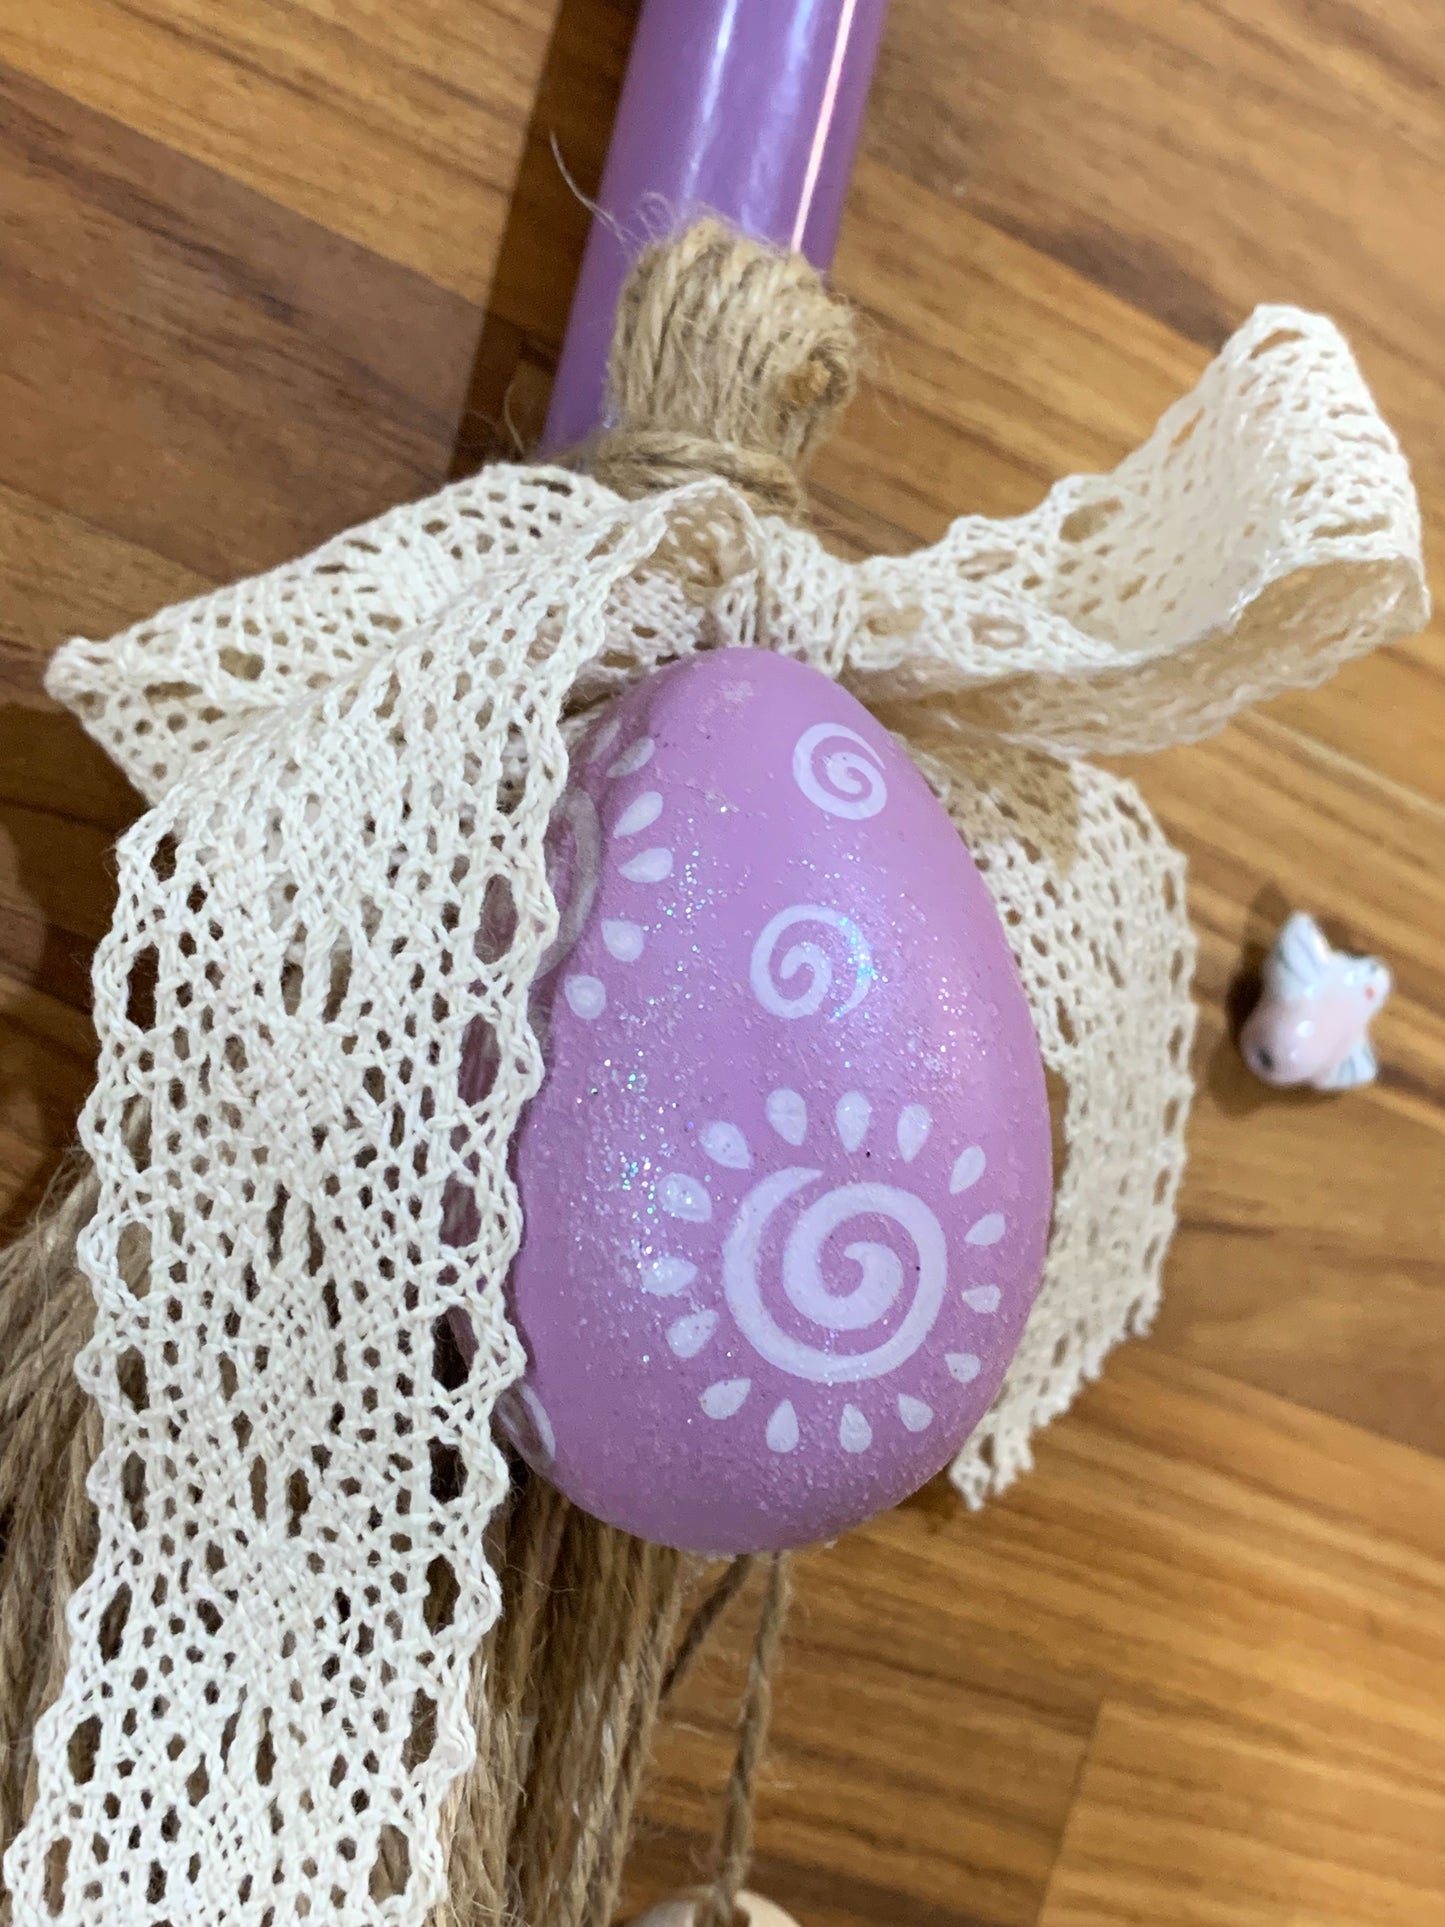 Have an eggcellent Easter...